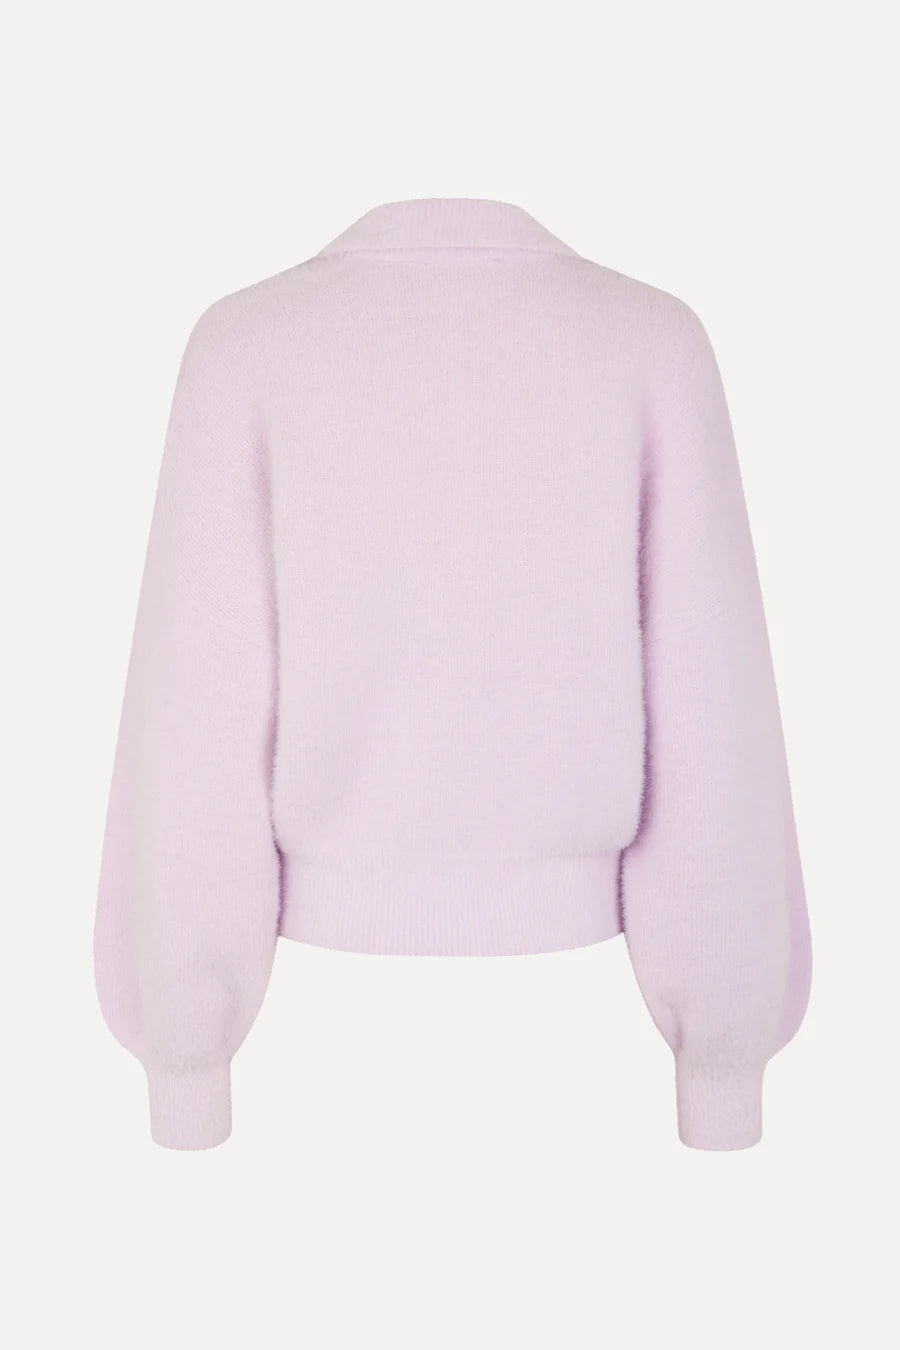 Naia Soft Sweater